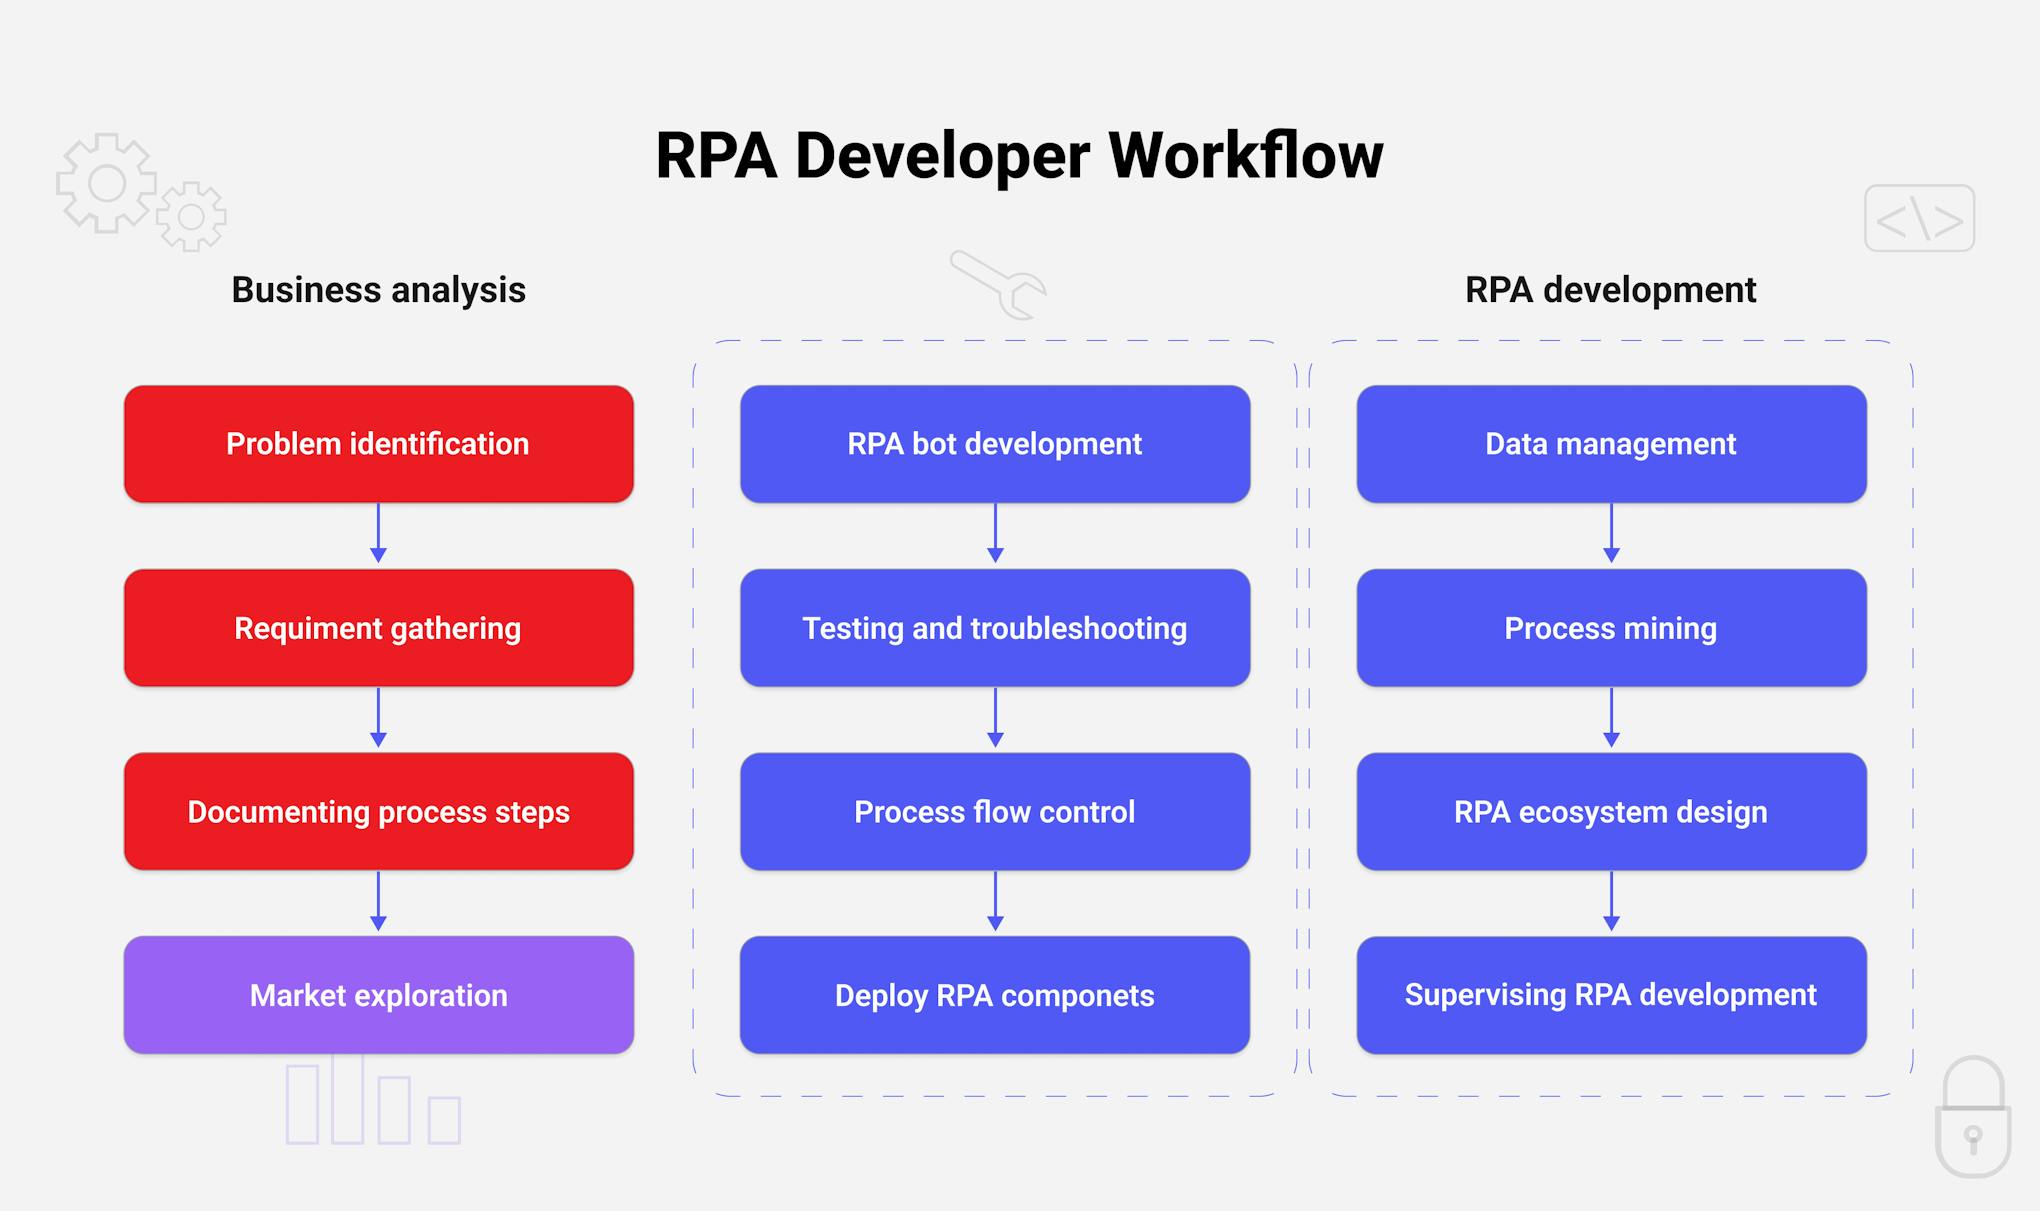 Workflow of an RPA developer.